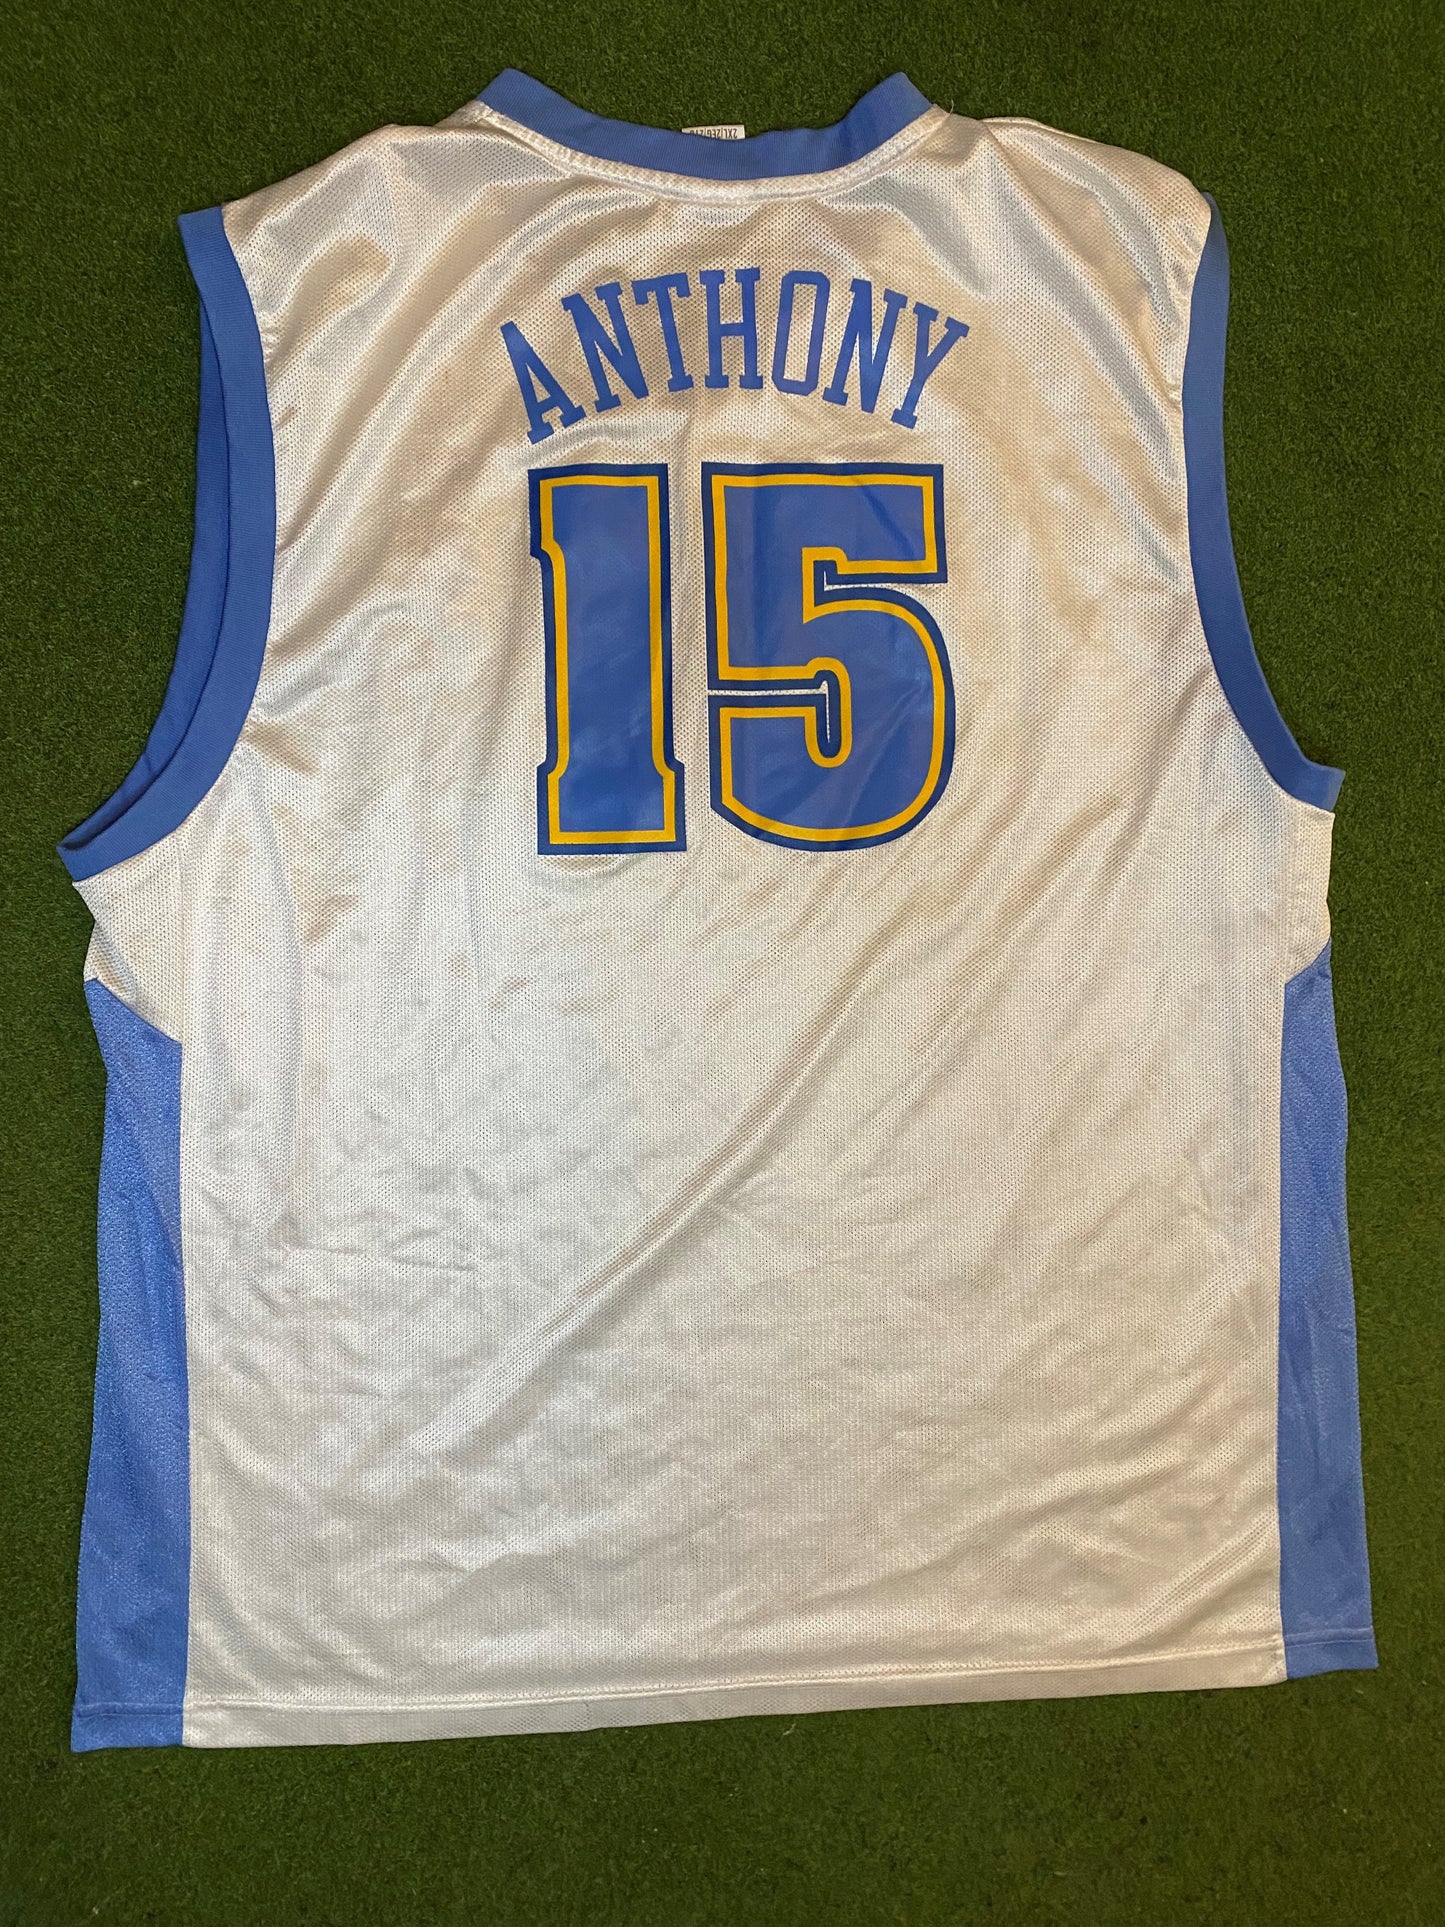 00s Denver Nuggets - Carmelo Anthony #15 - Reebok - Vintage NBA Jersey (2XL)